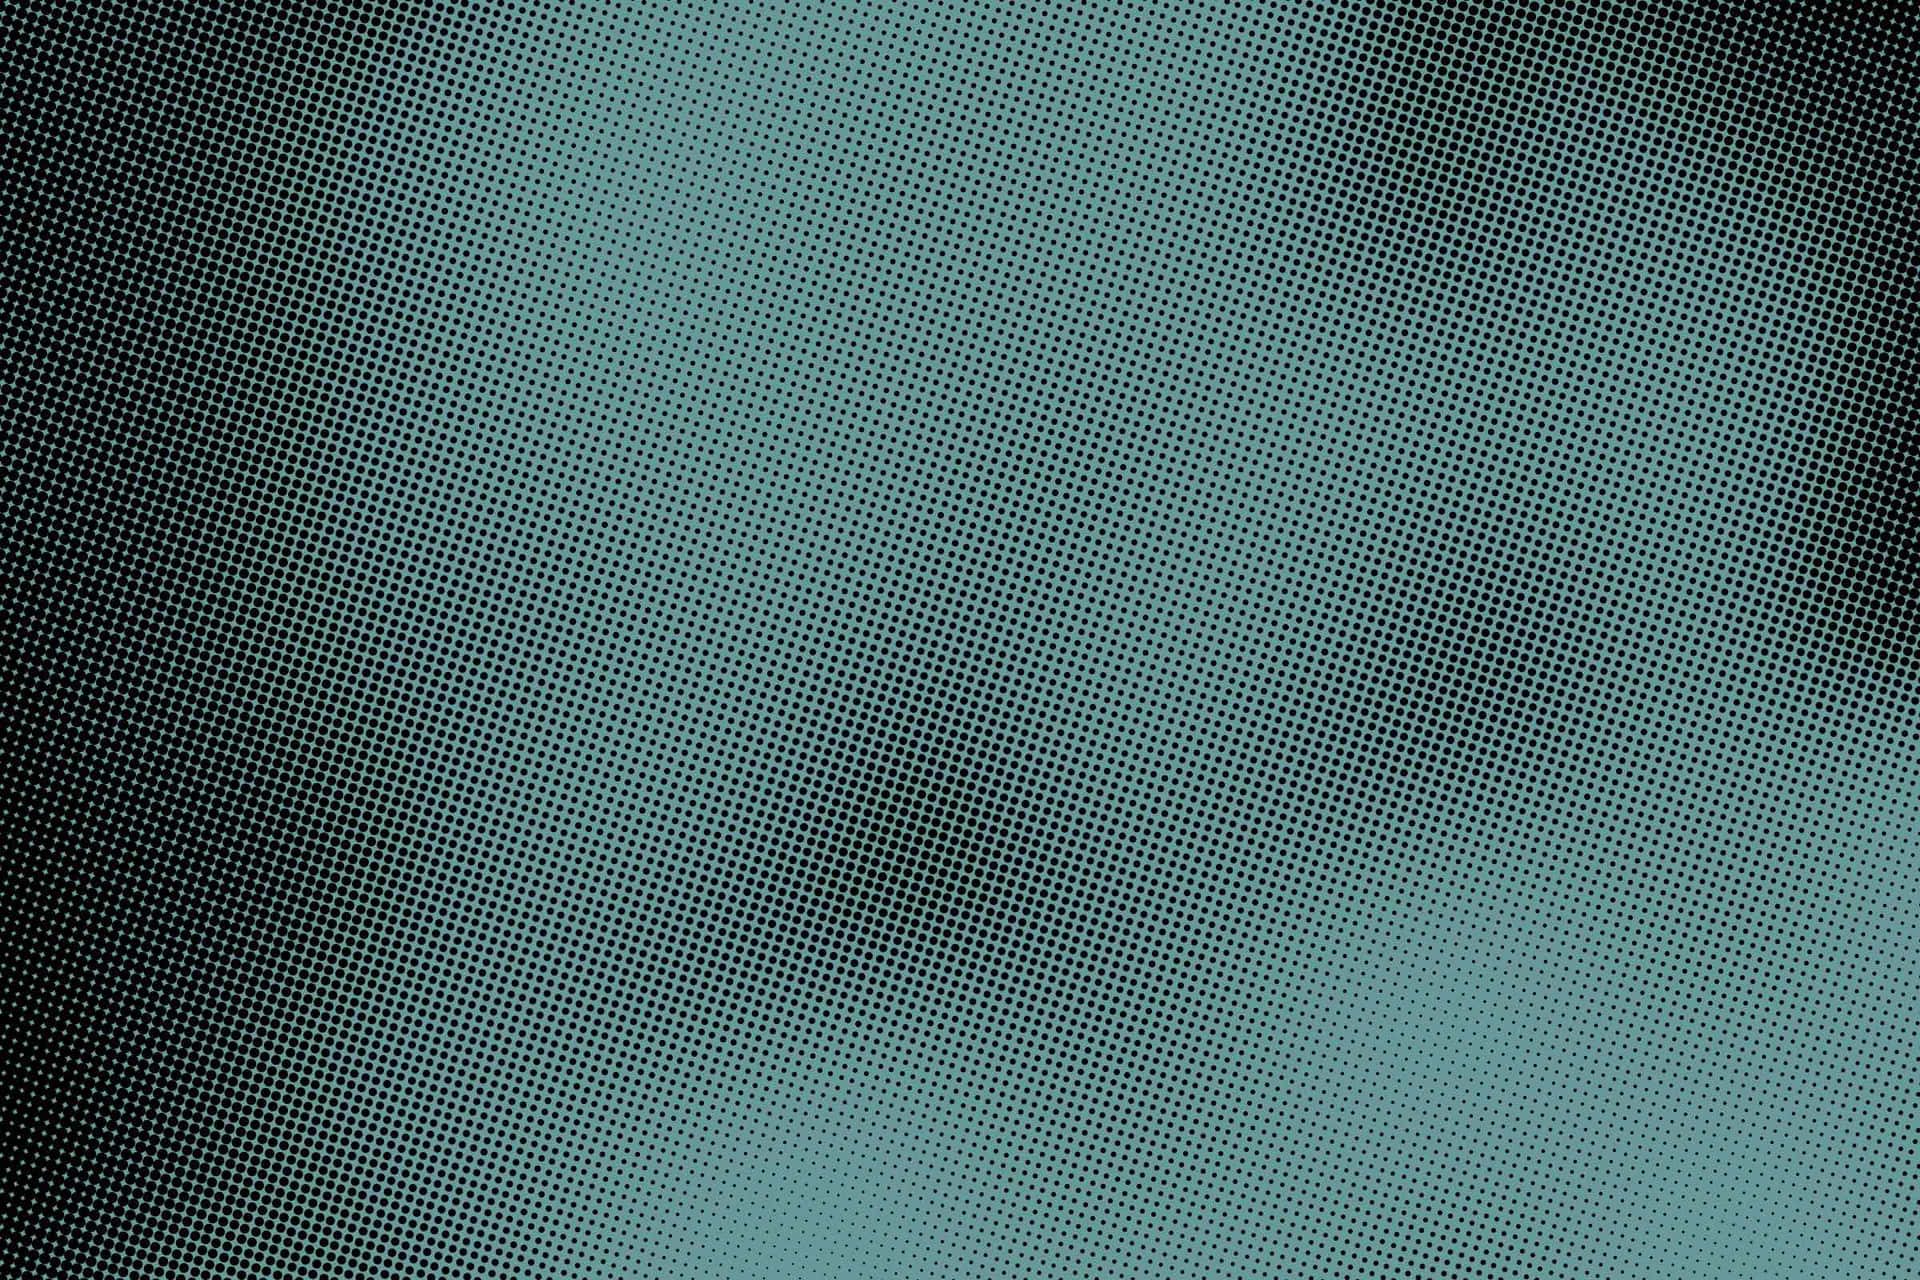 Abnormal Blurred Image Wallpaper